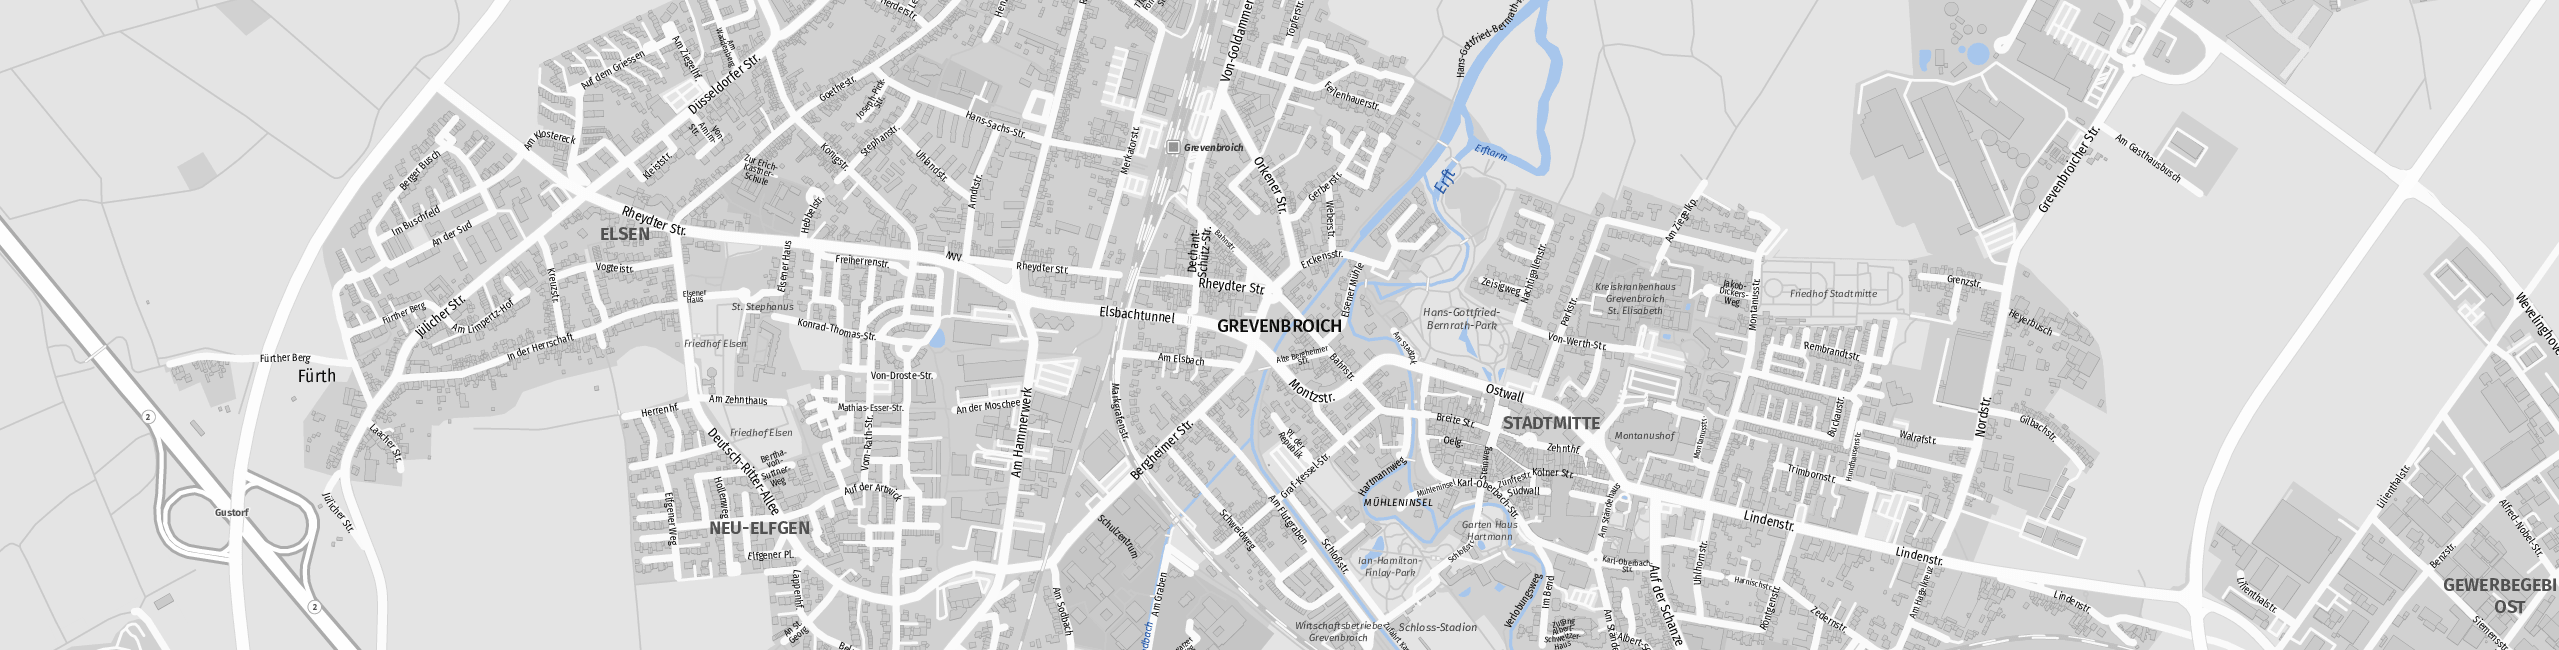 Stadtplan Grevenbroich zum Downloaden.